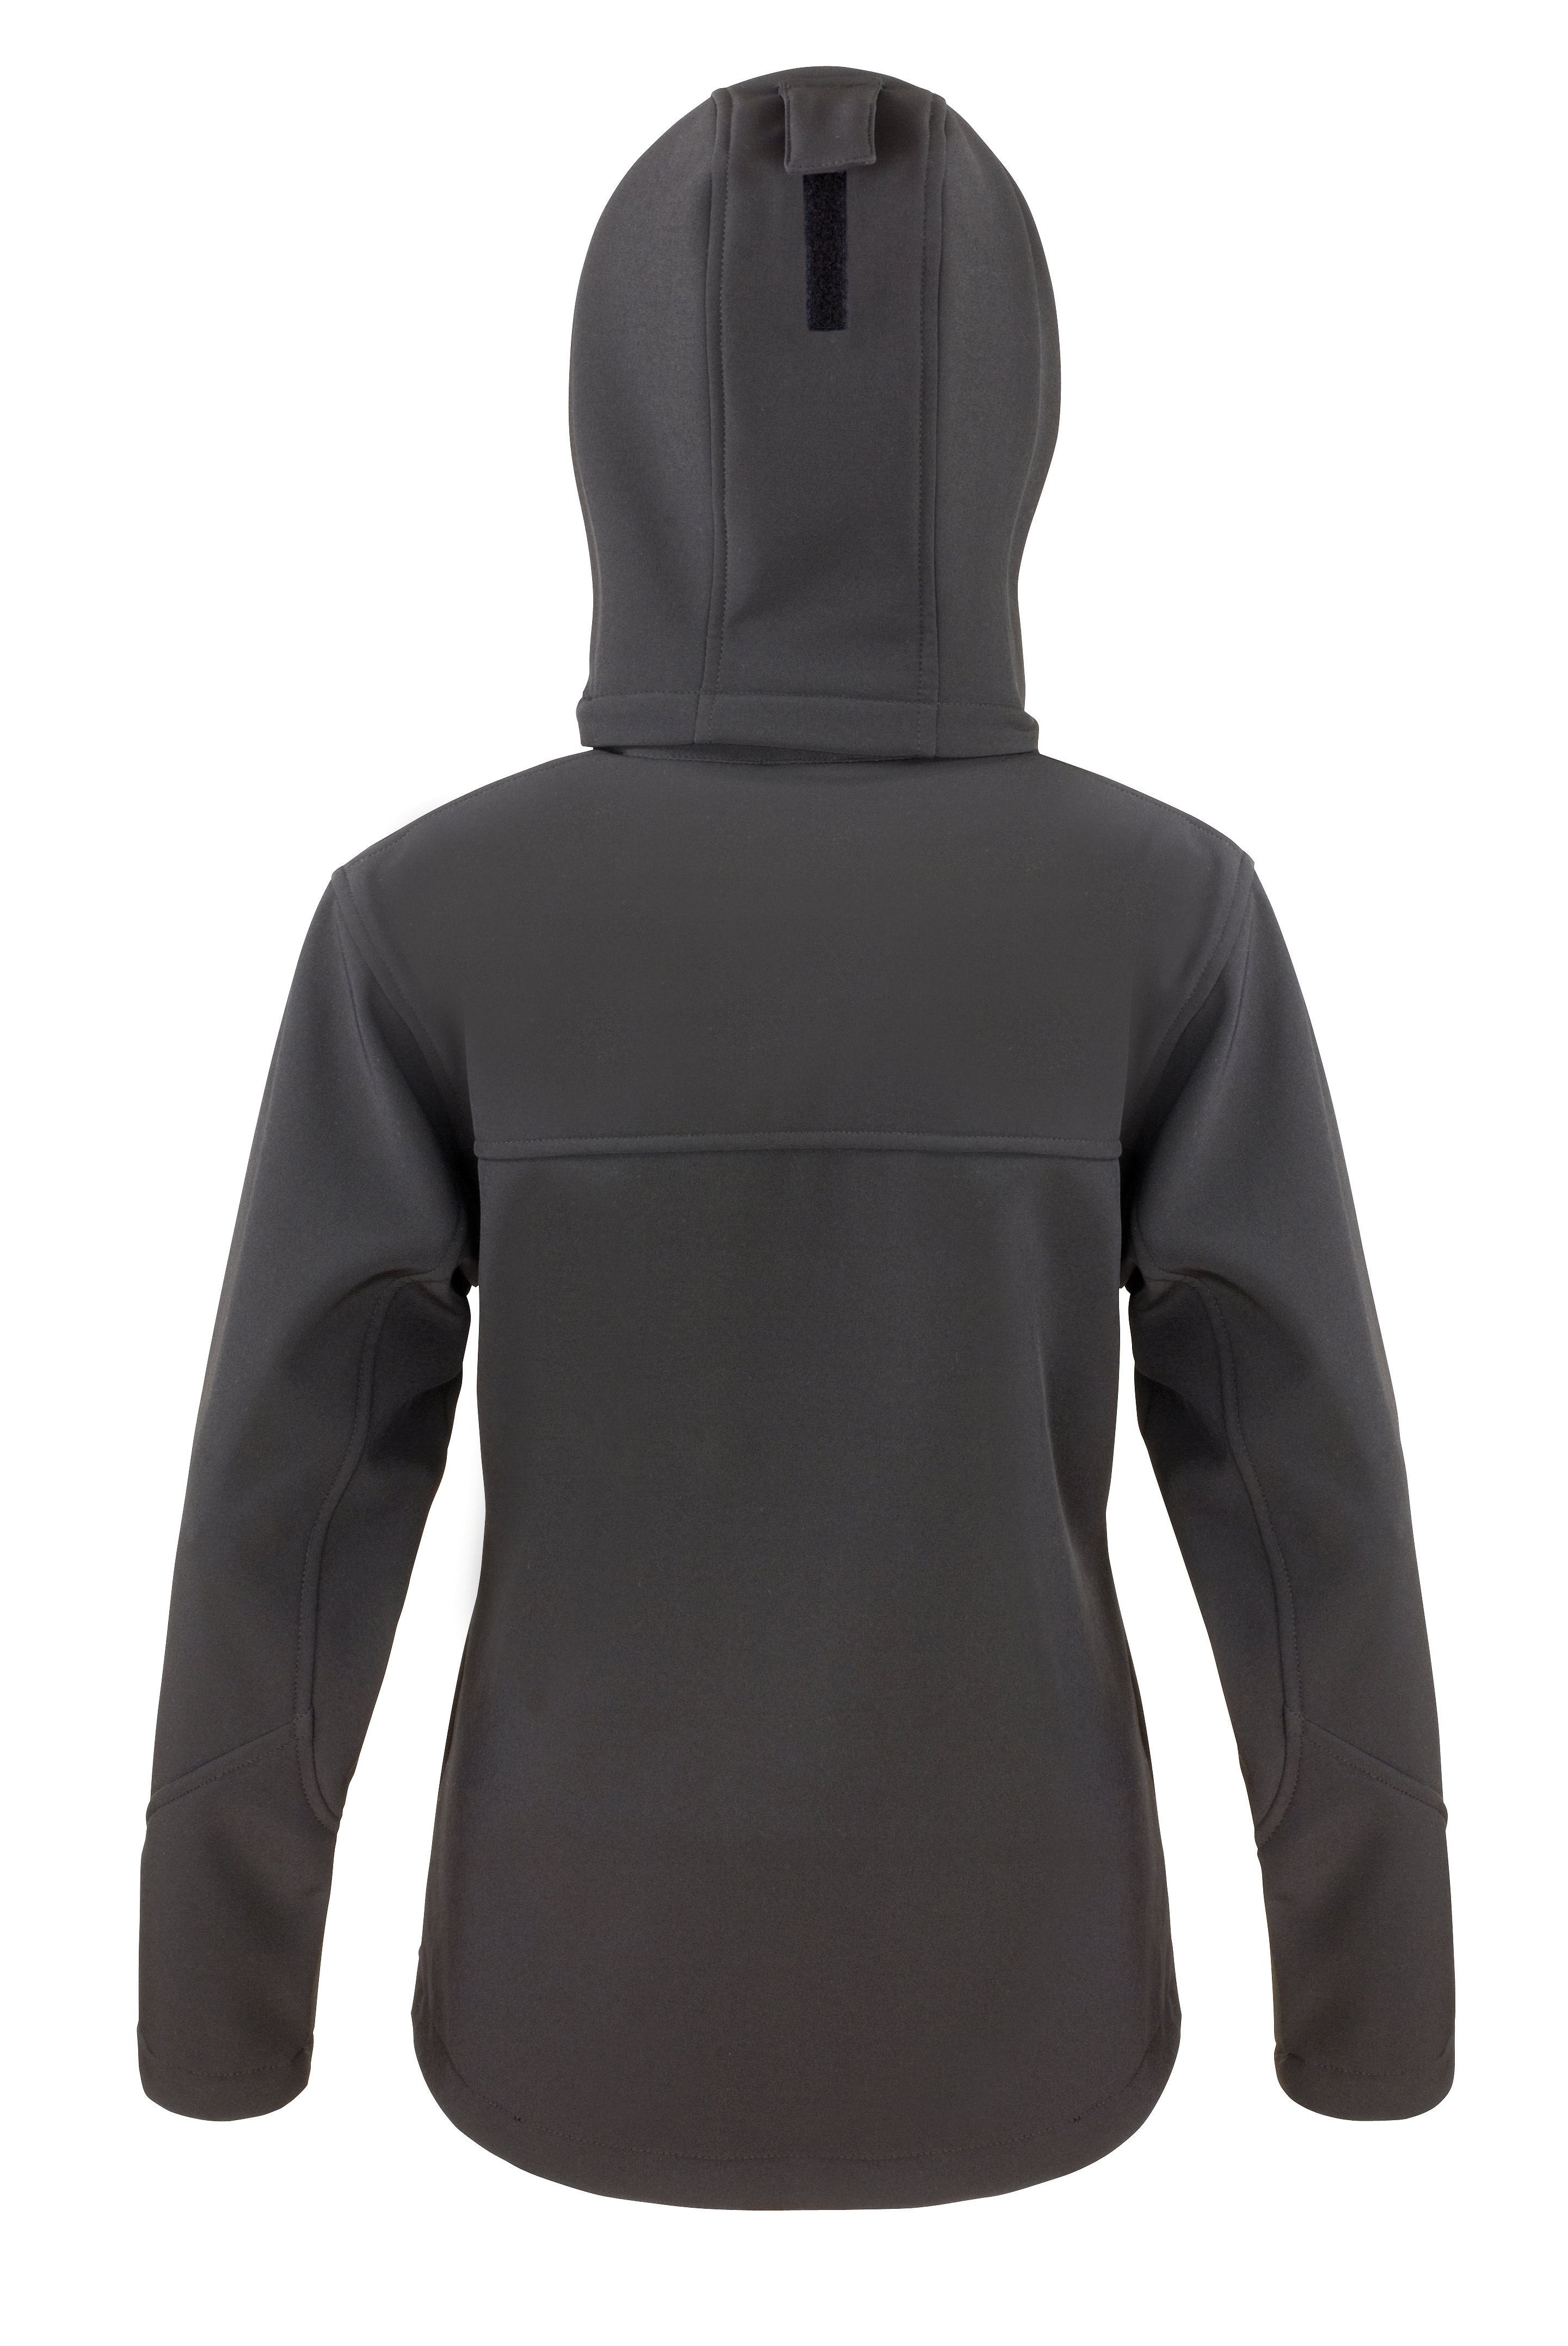 Sport Outdoorjacken Result Softshelljacke Damen Soft Shell Jacke mit Kapuze Wasserdicht (8000mm)